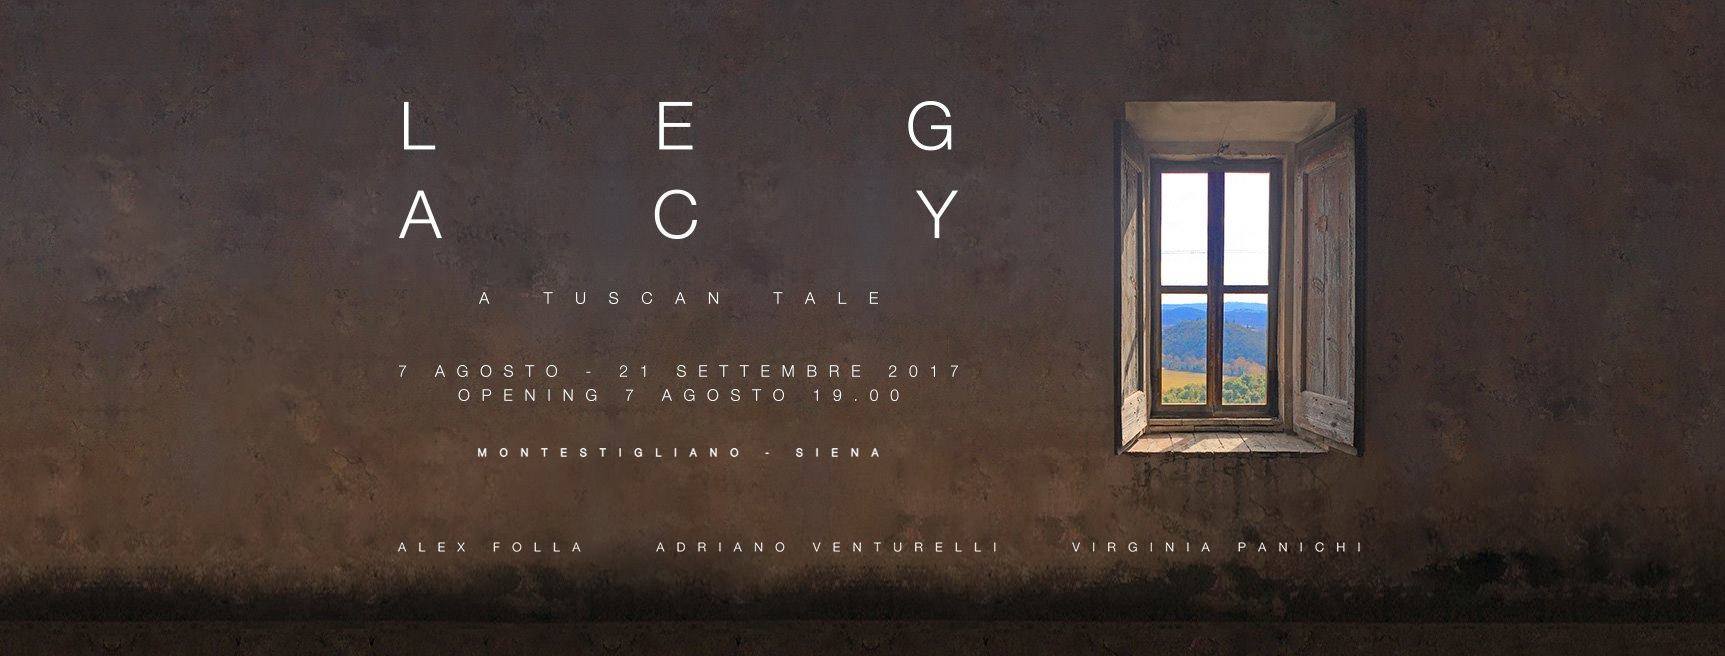 Legacy – A Tuscan Tale